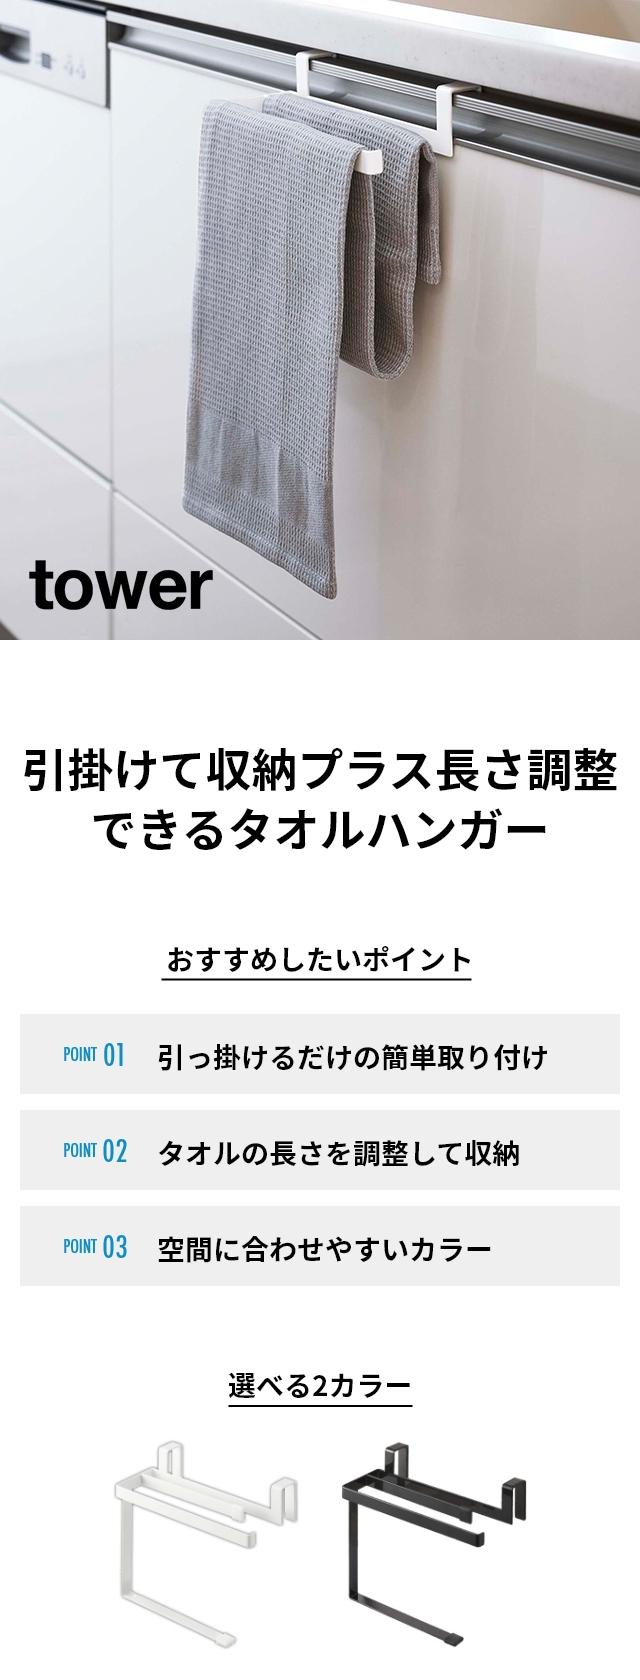 tower(タワー) 挟み込み防止タオルハンガー